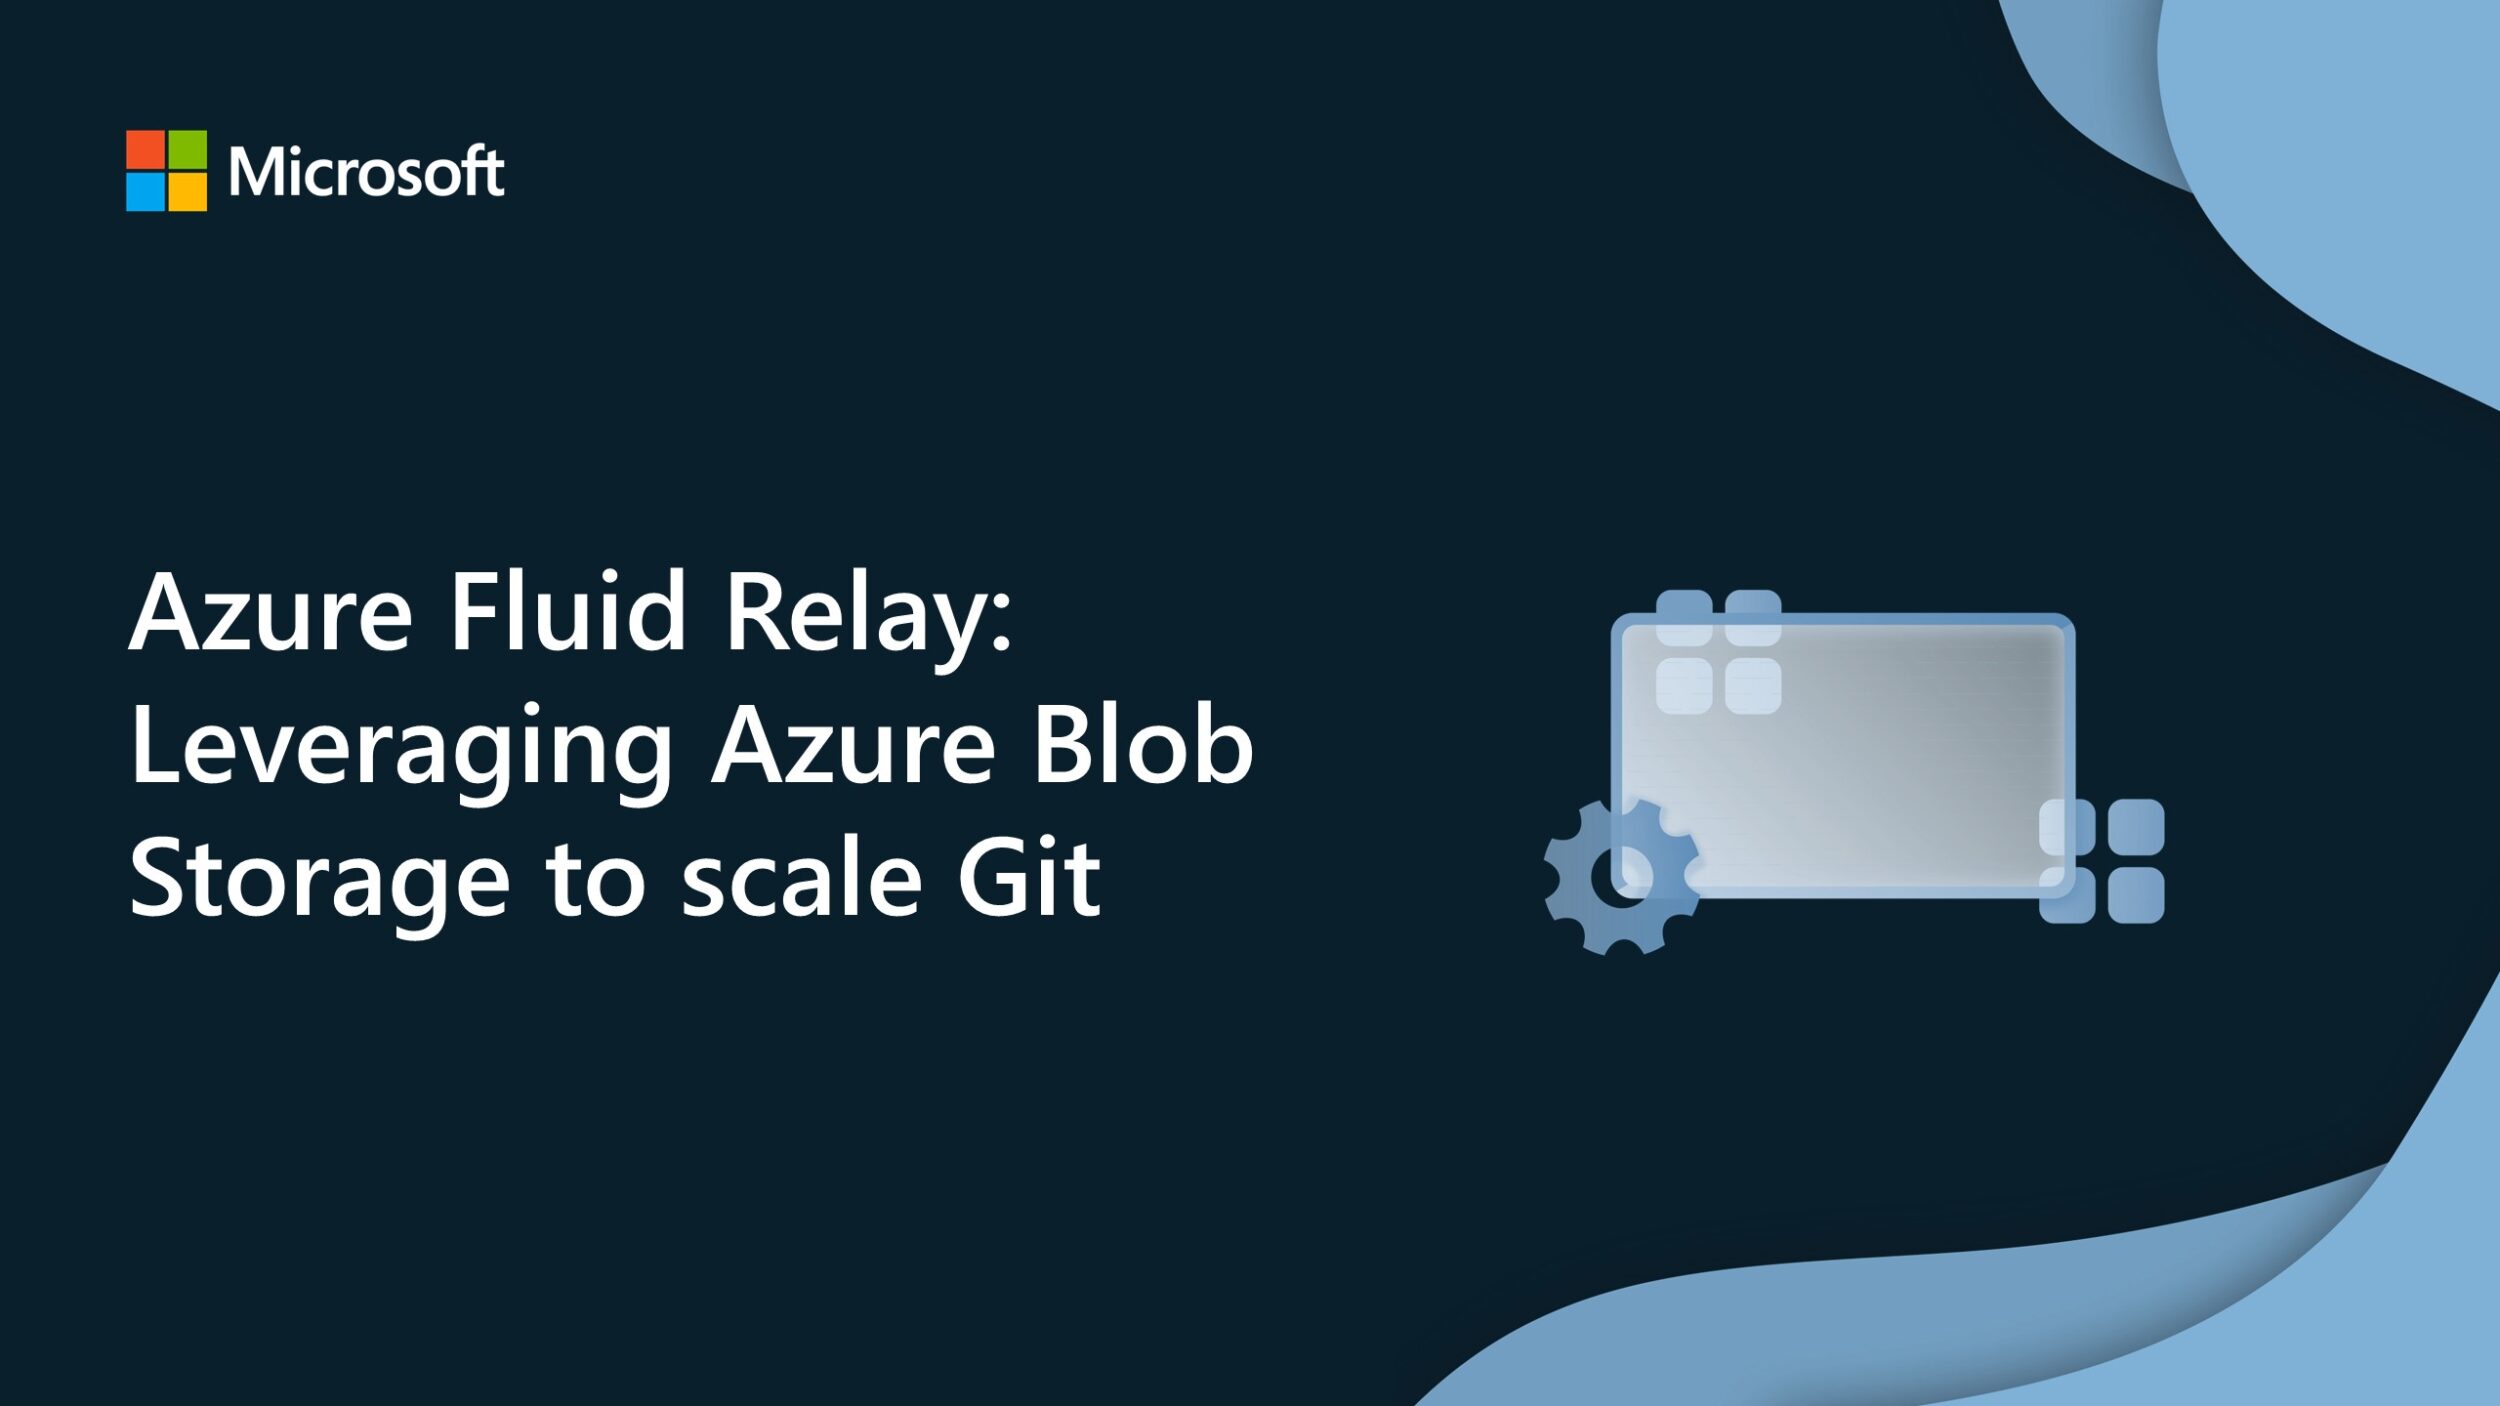 Azure Fluid Relay: Leveraging Azure Blob Storage to scale Git